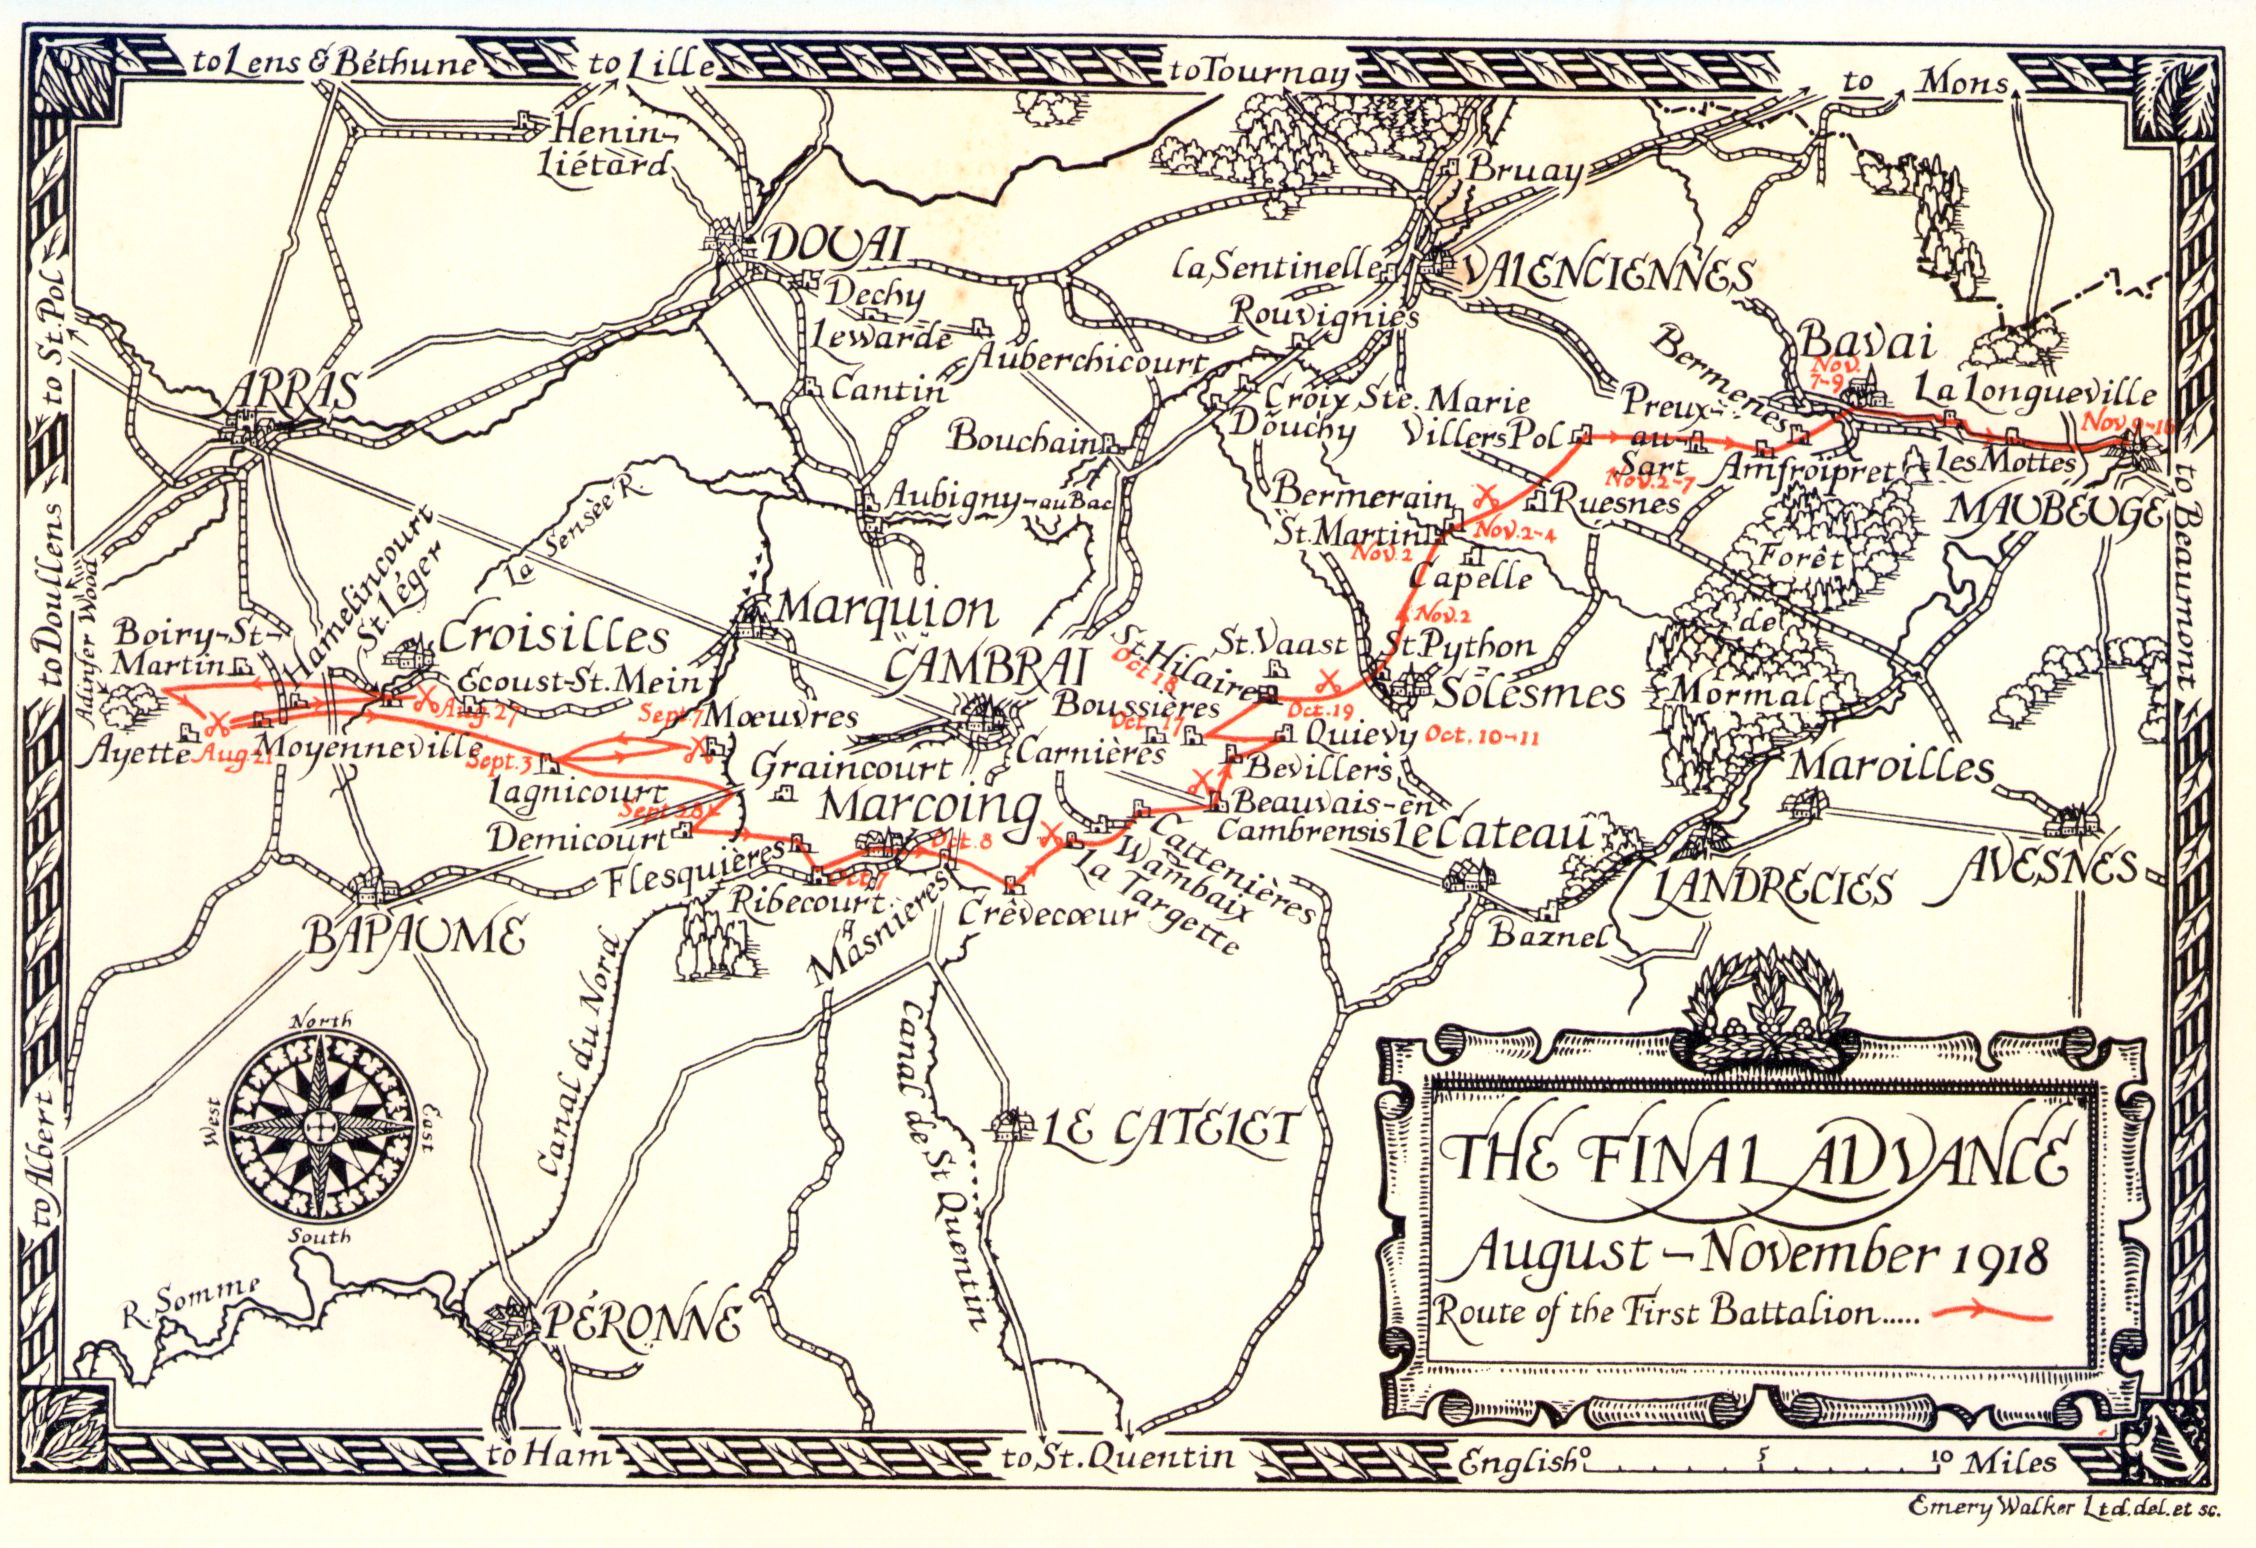 The Final Advance, August-November 1918